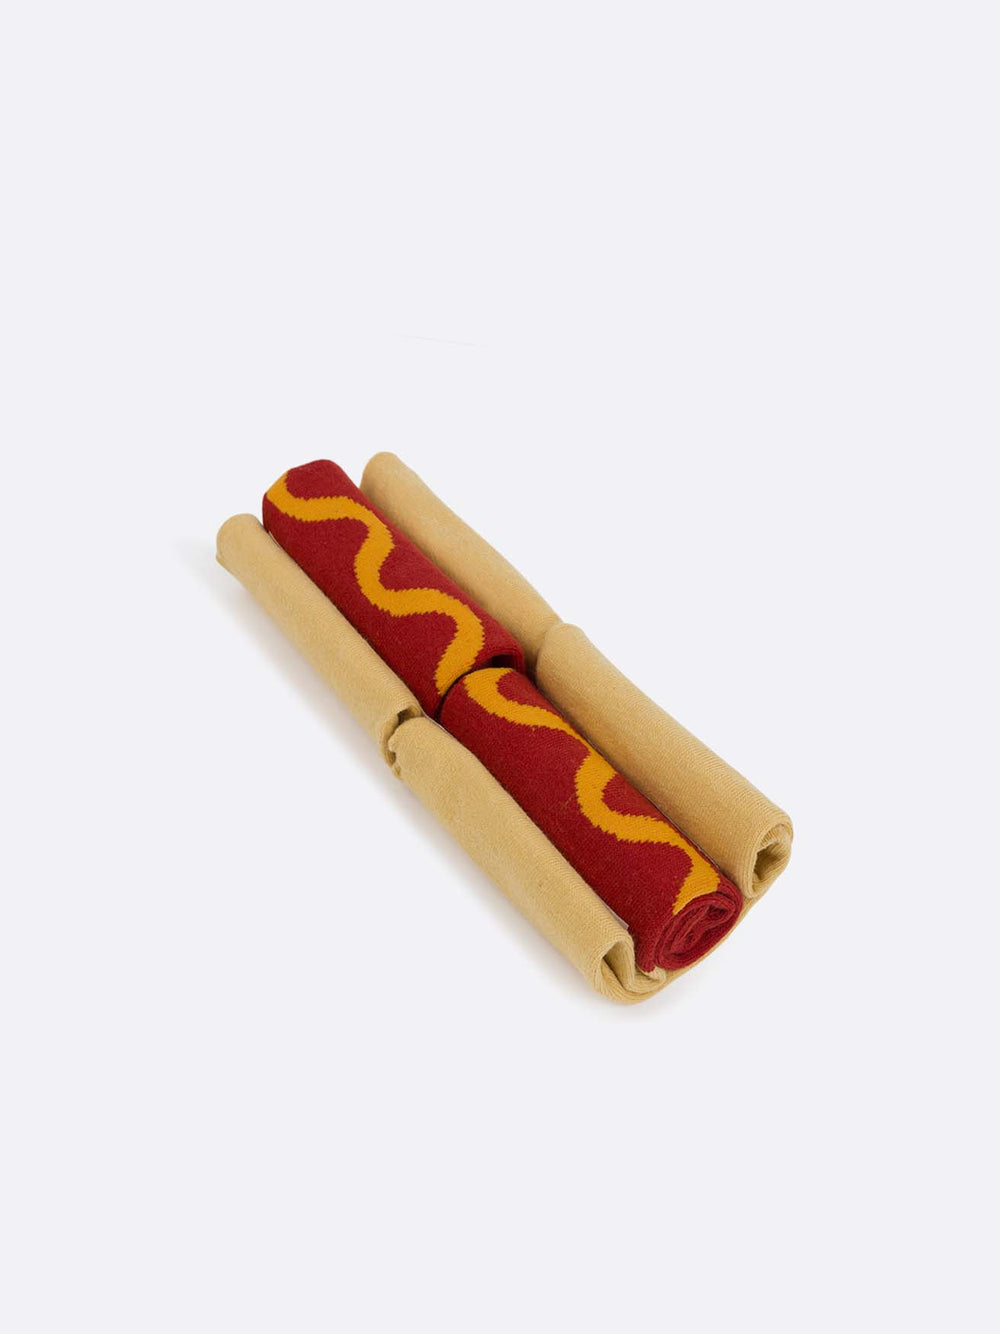 Hot Dog Socks - #Perch#